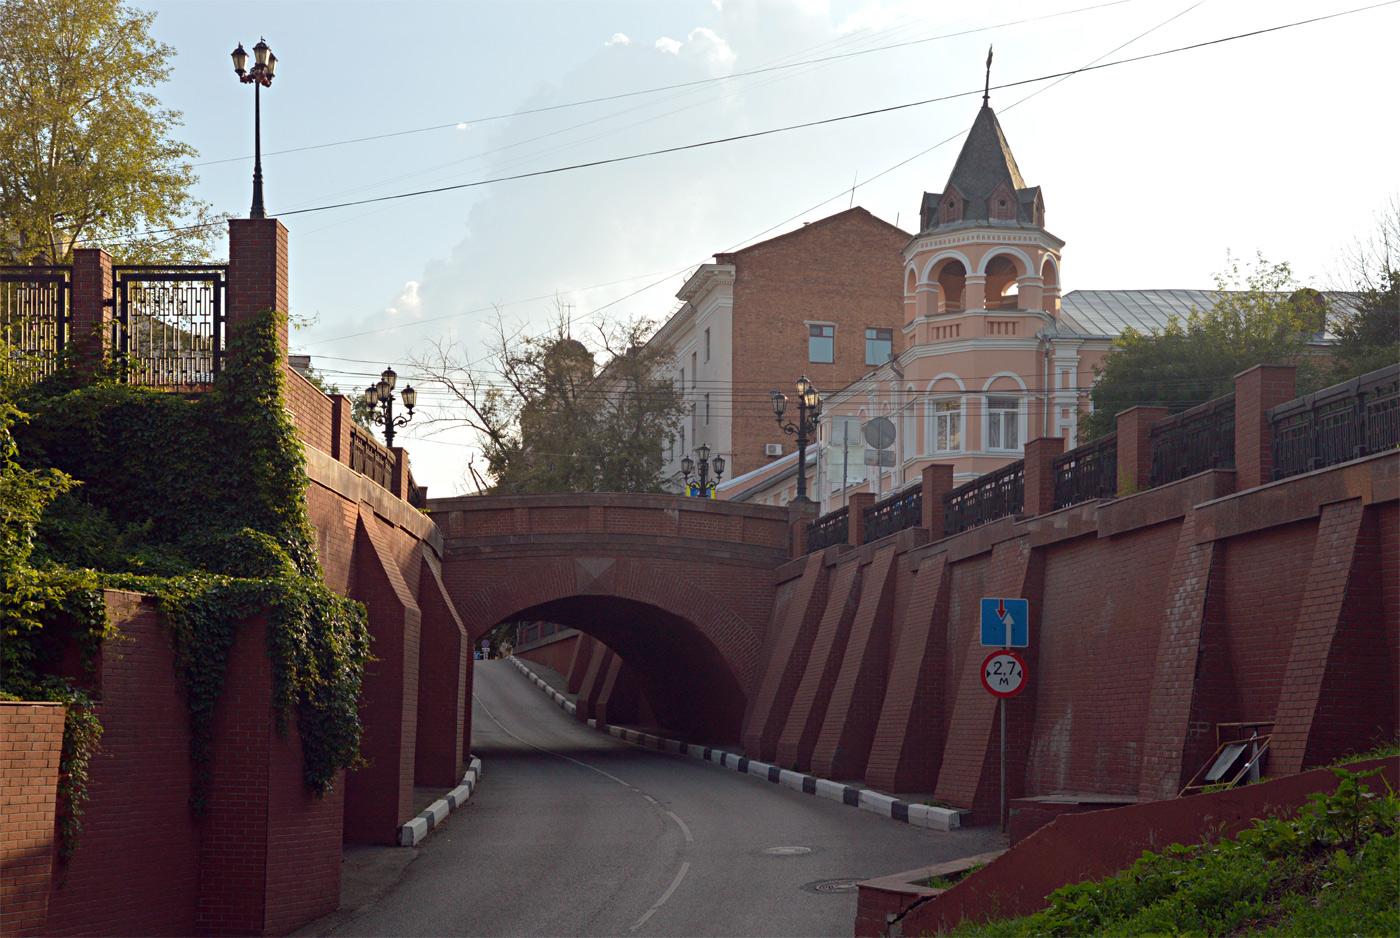 Voronezh, Каменный мост